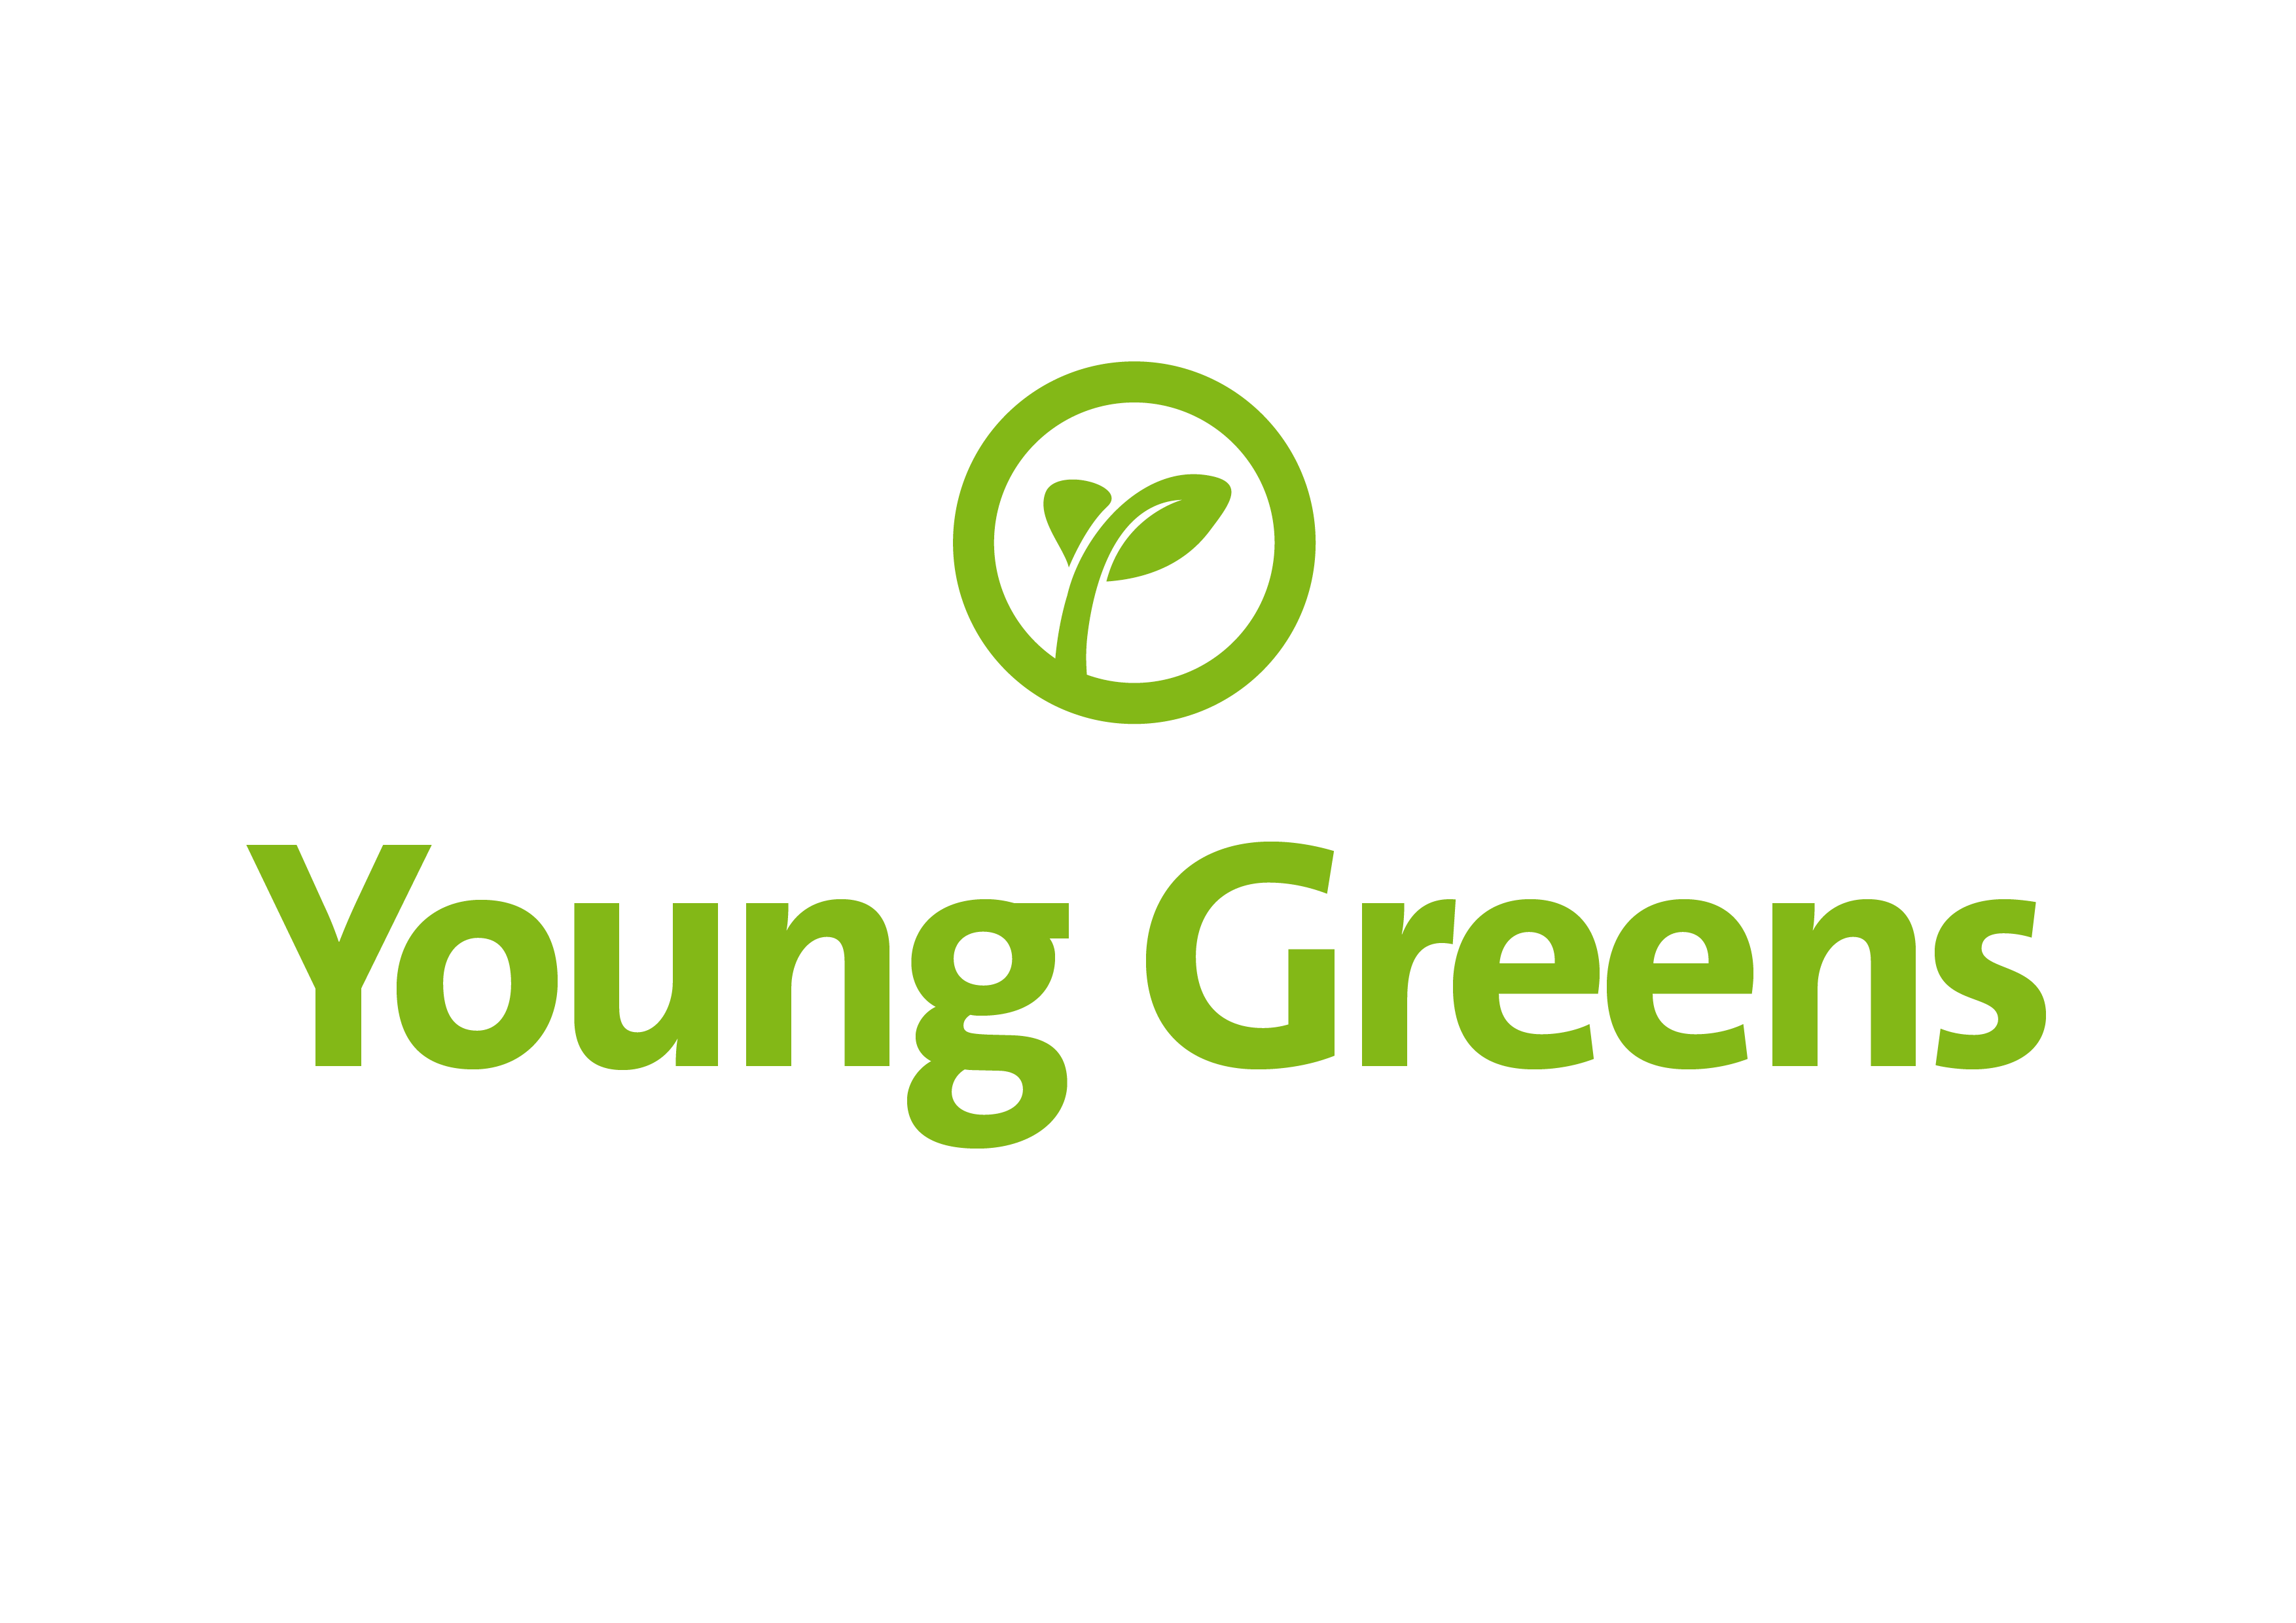 With Green Circle Brand Logo - Logos and Branding